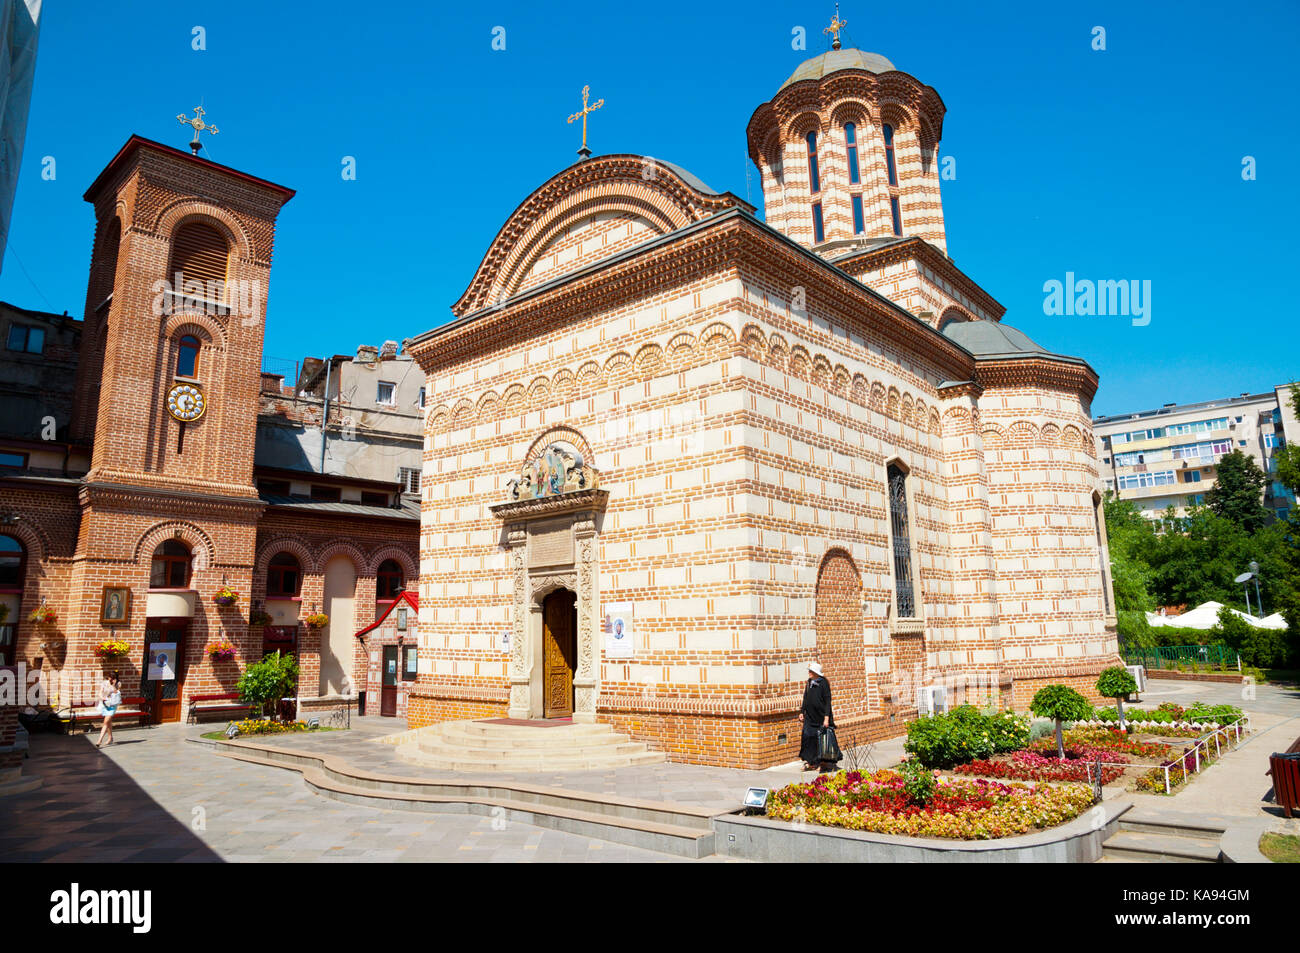 Biserica Sfantul Anton, Curtea Veche church, Old Princely Court, Bucharest, Romania Stock Photo